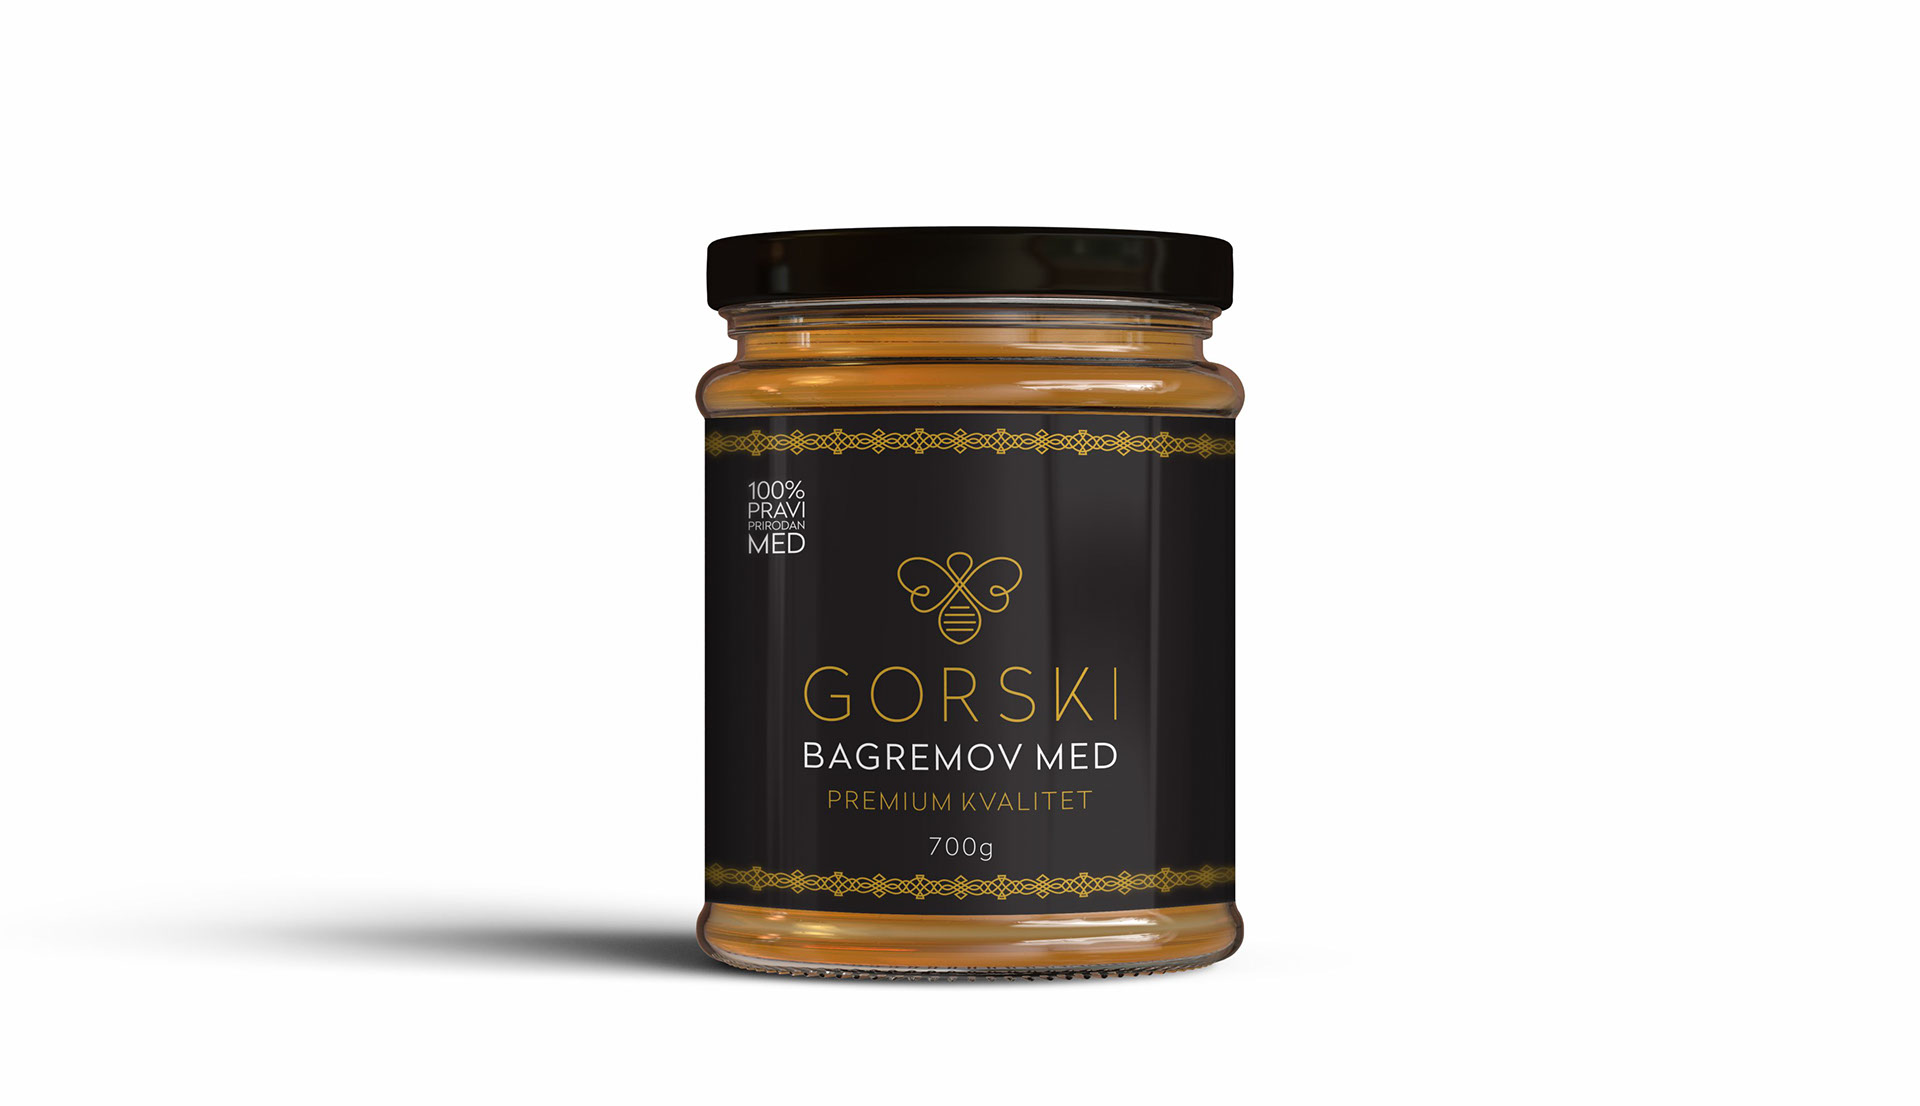   GORSKI蜂蜜创意包装设计展示1